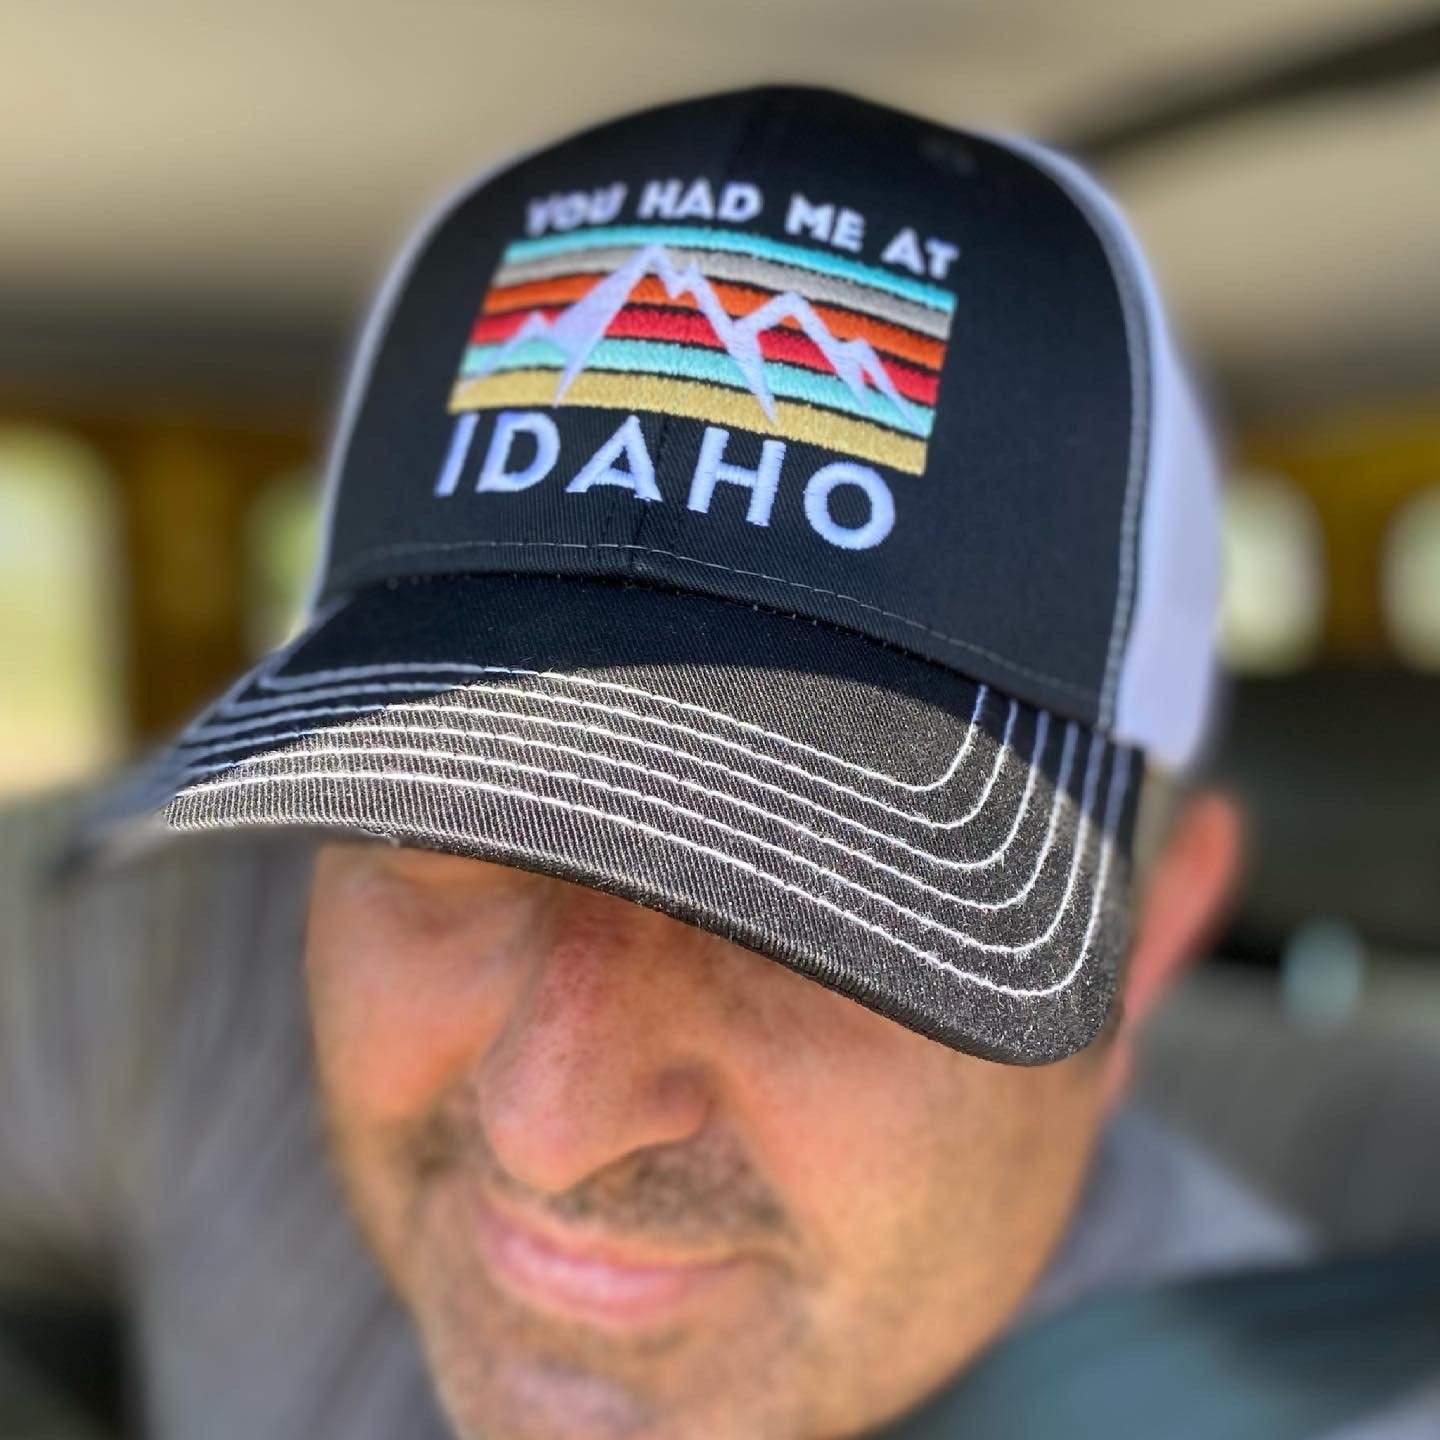 208 Supply Co Hat You Had Me At Idaho Hat